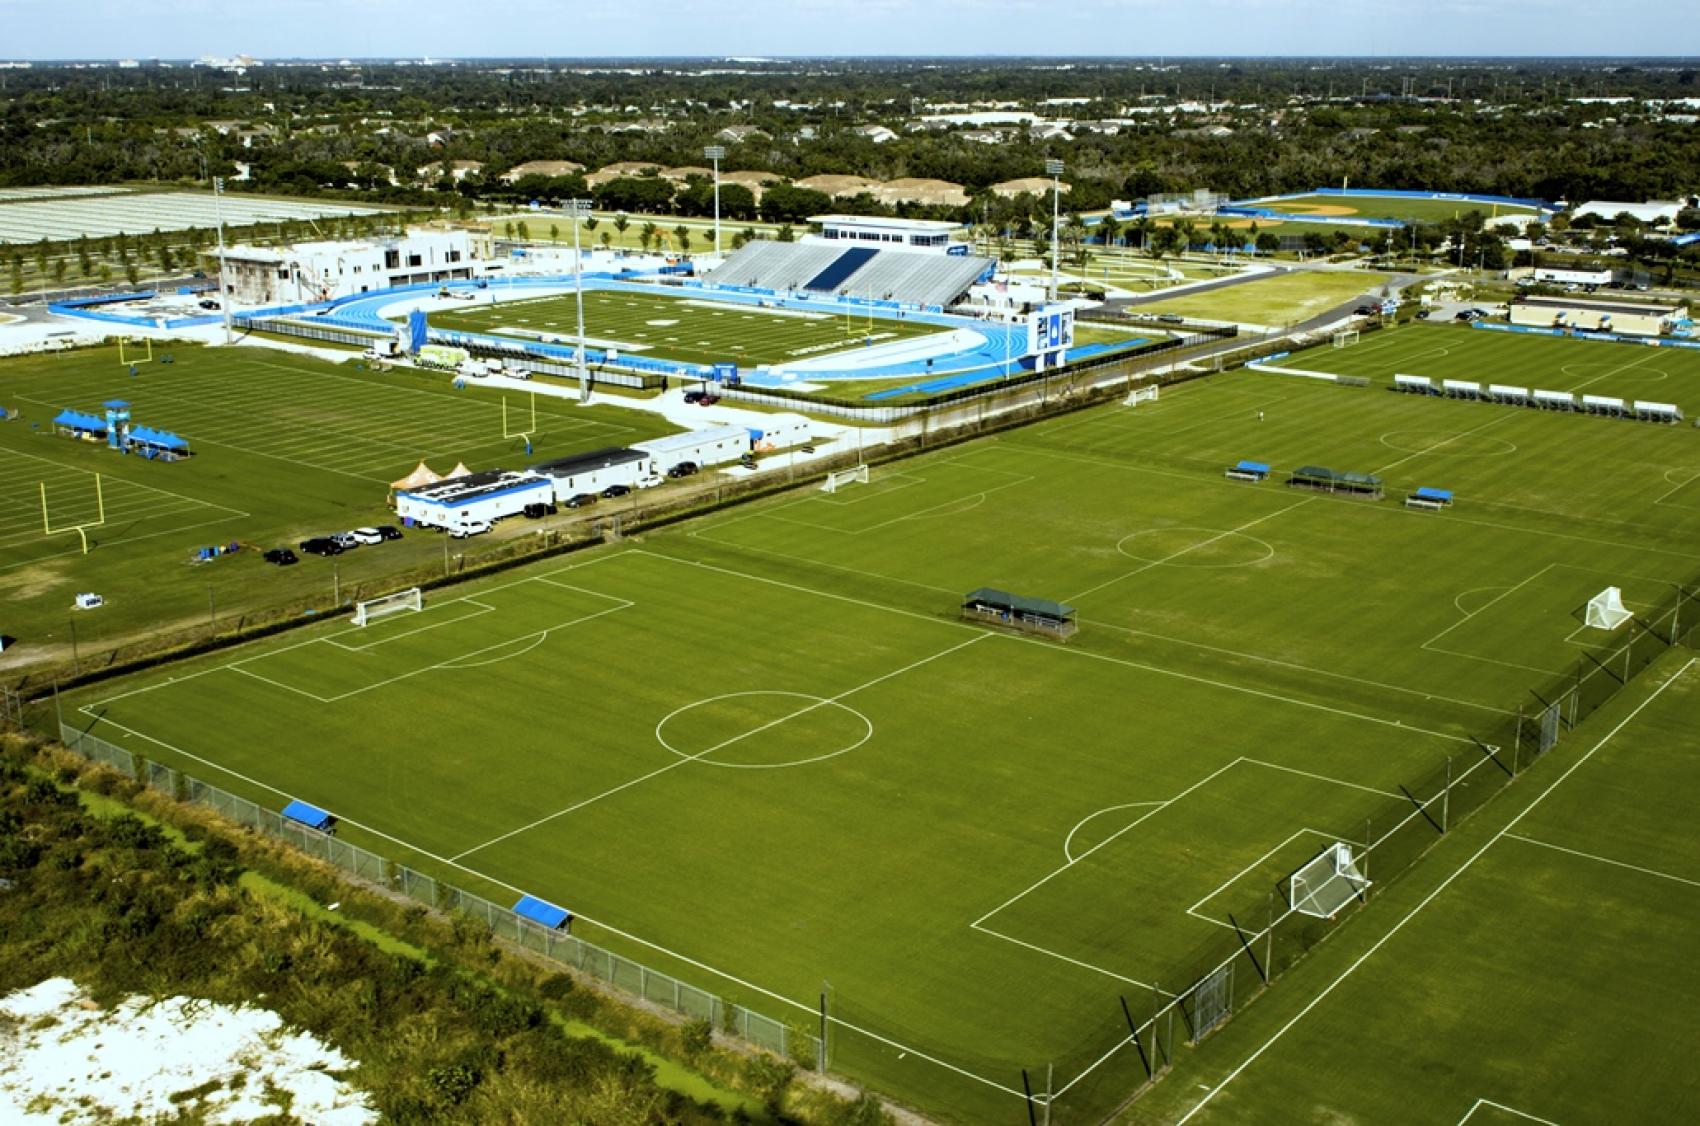 IMG Academy named 'Best Regular Match Facility' by U.S. Soccer